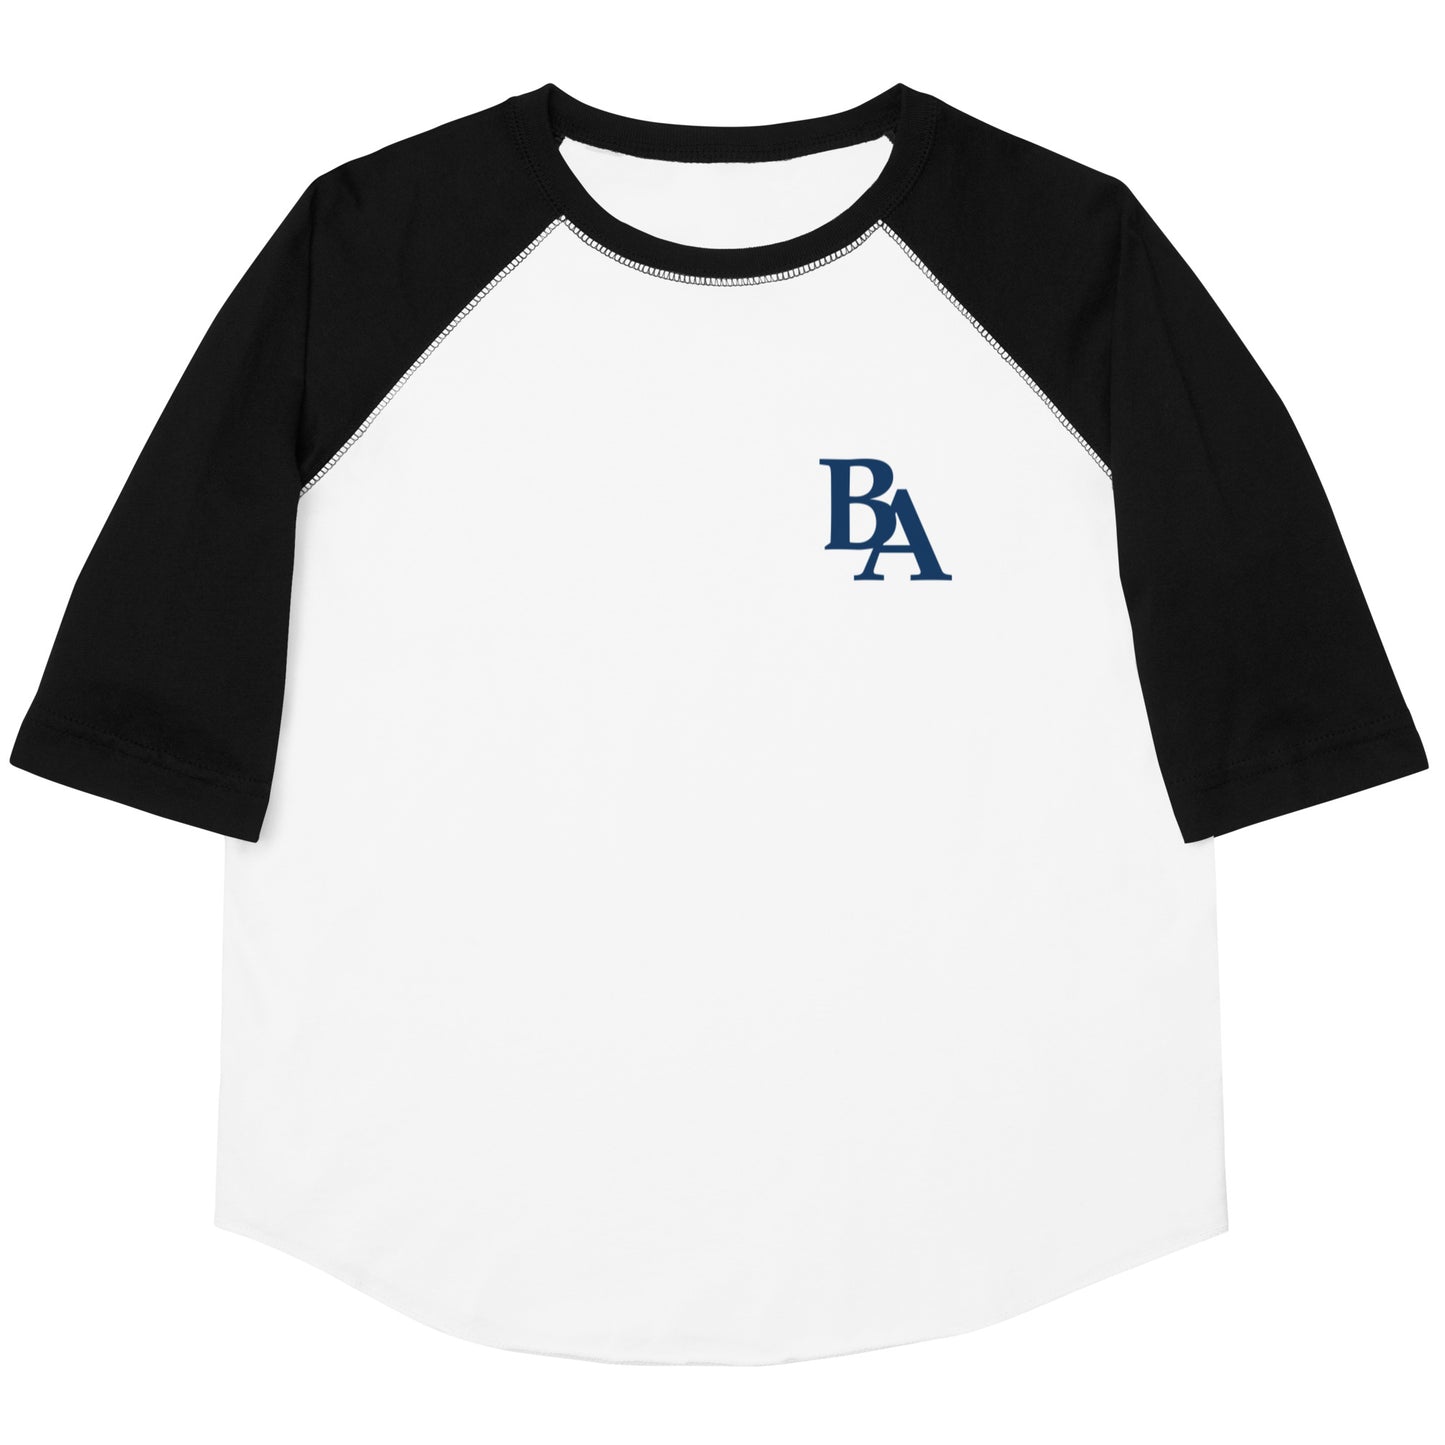 Youth Baseball Shirt